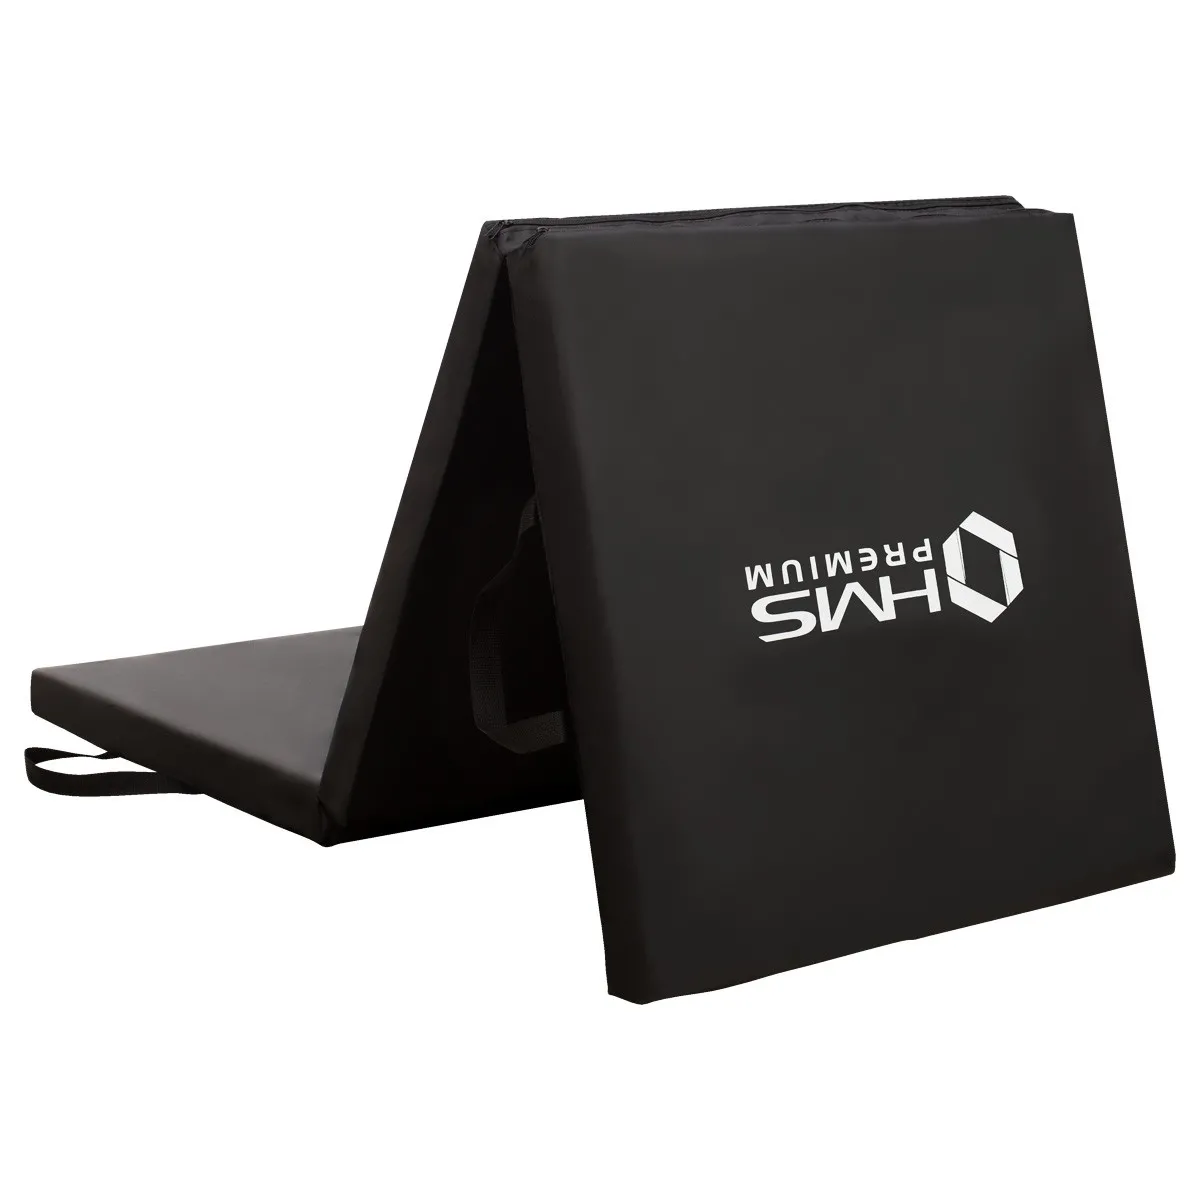 Gymnastics mat foldable black 180x60 cm